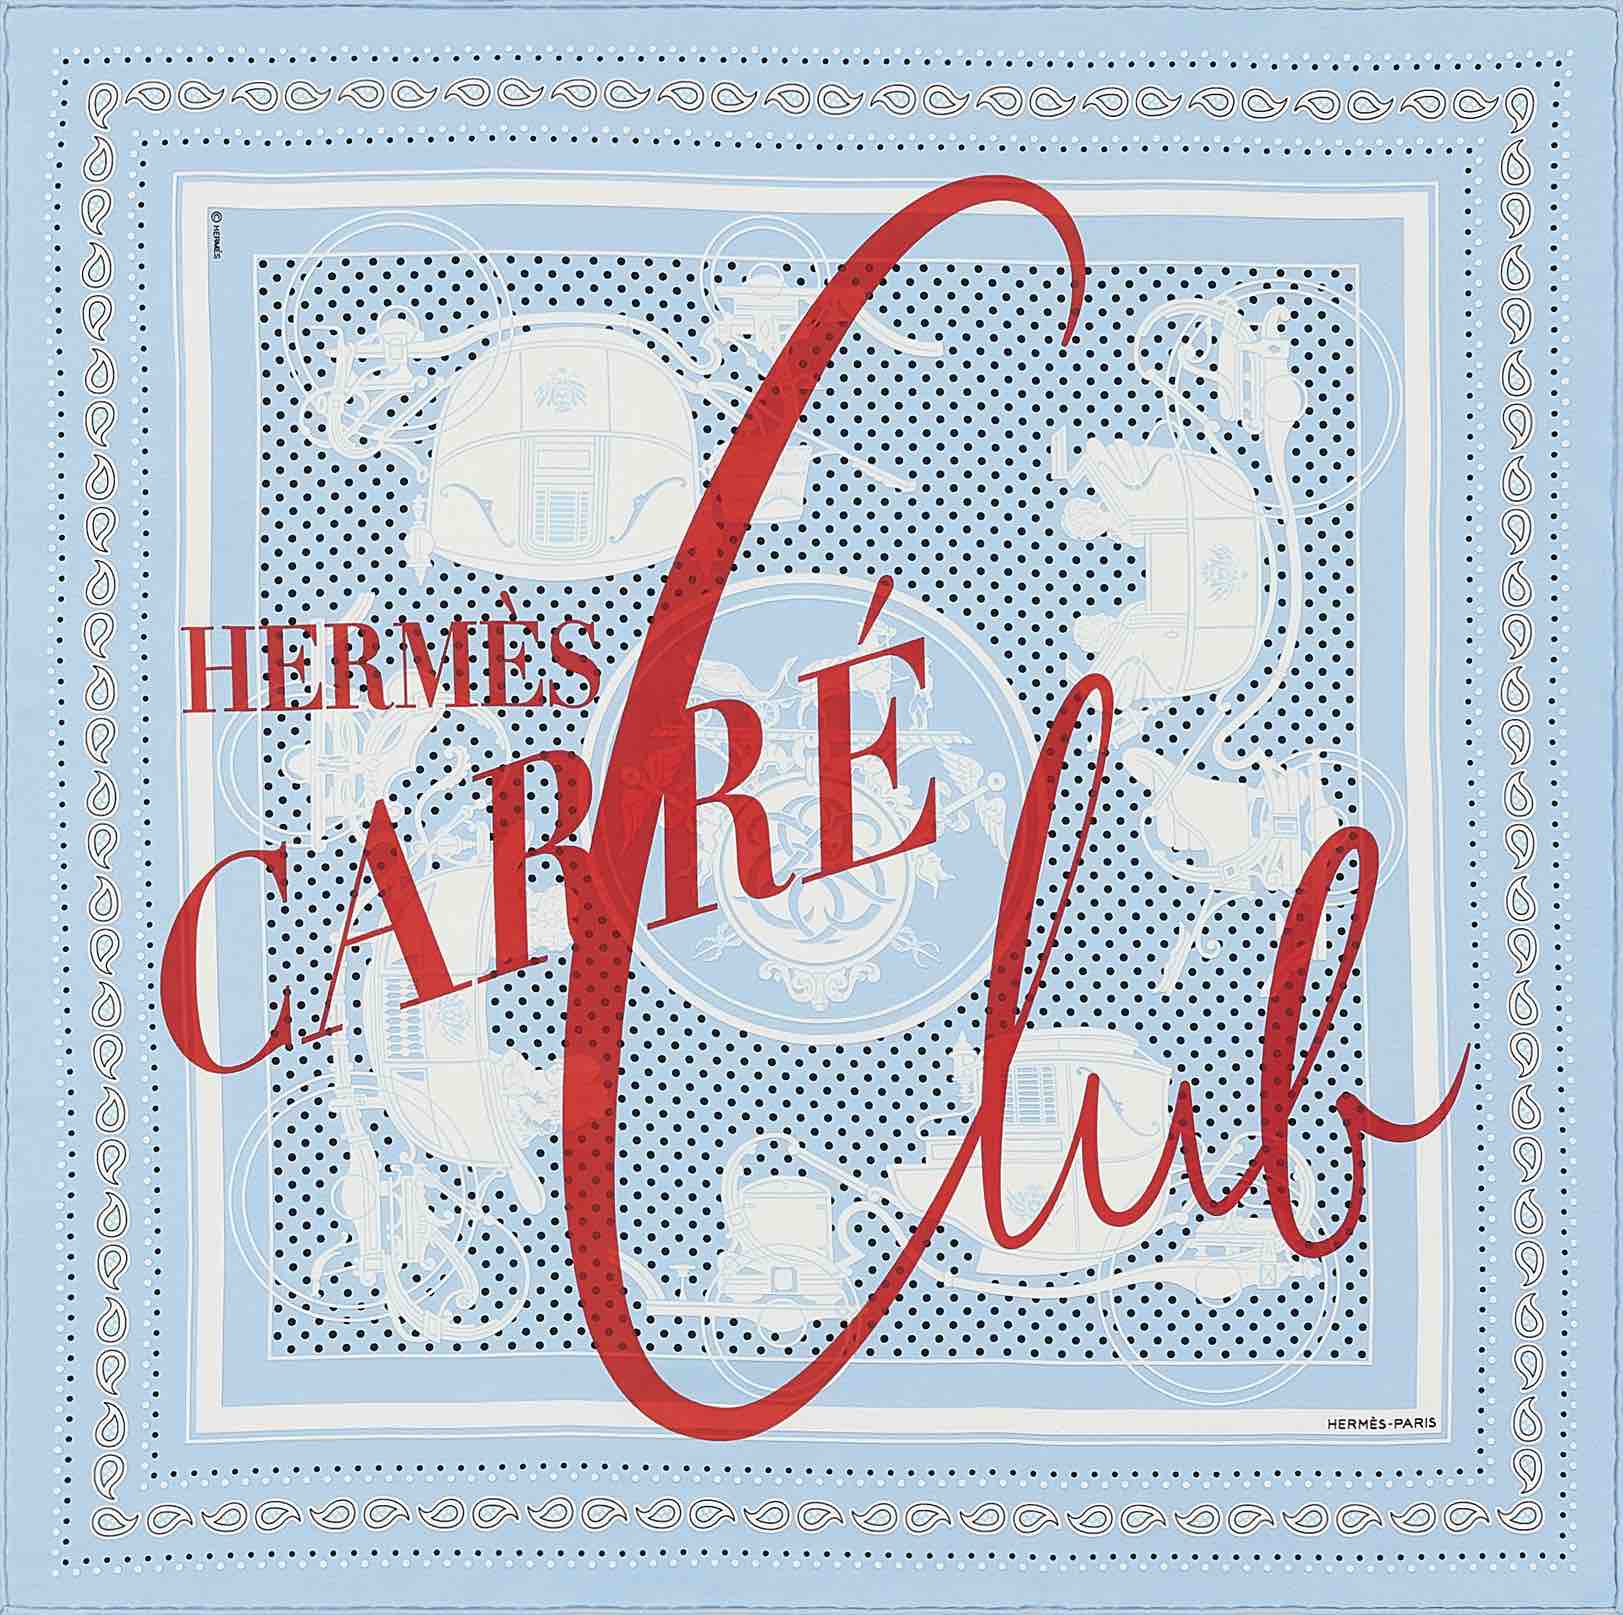 Hermès Carré Club, Bandana Ex Libris